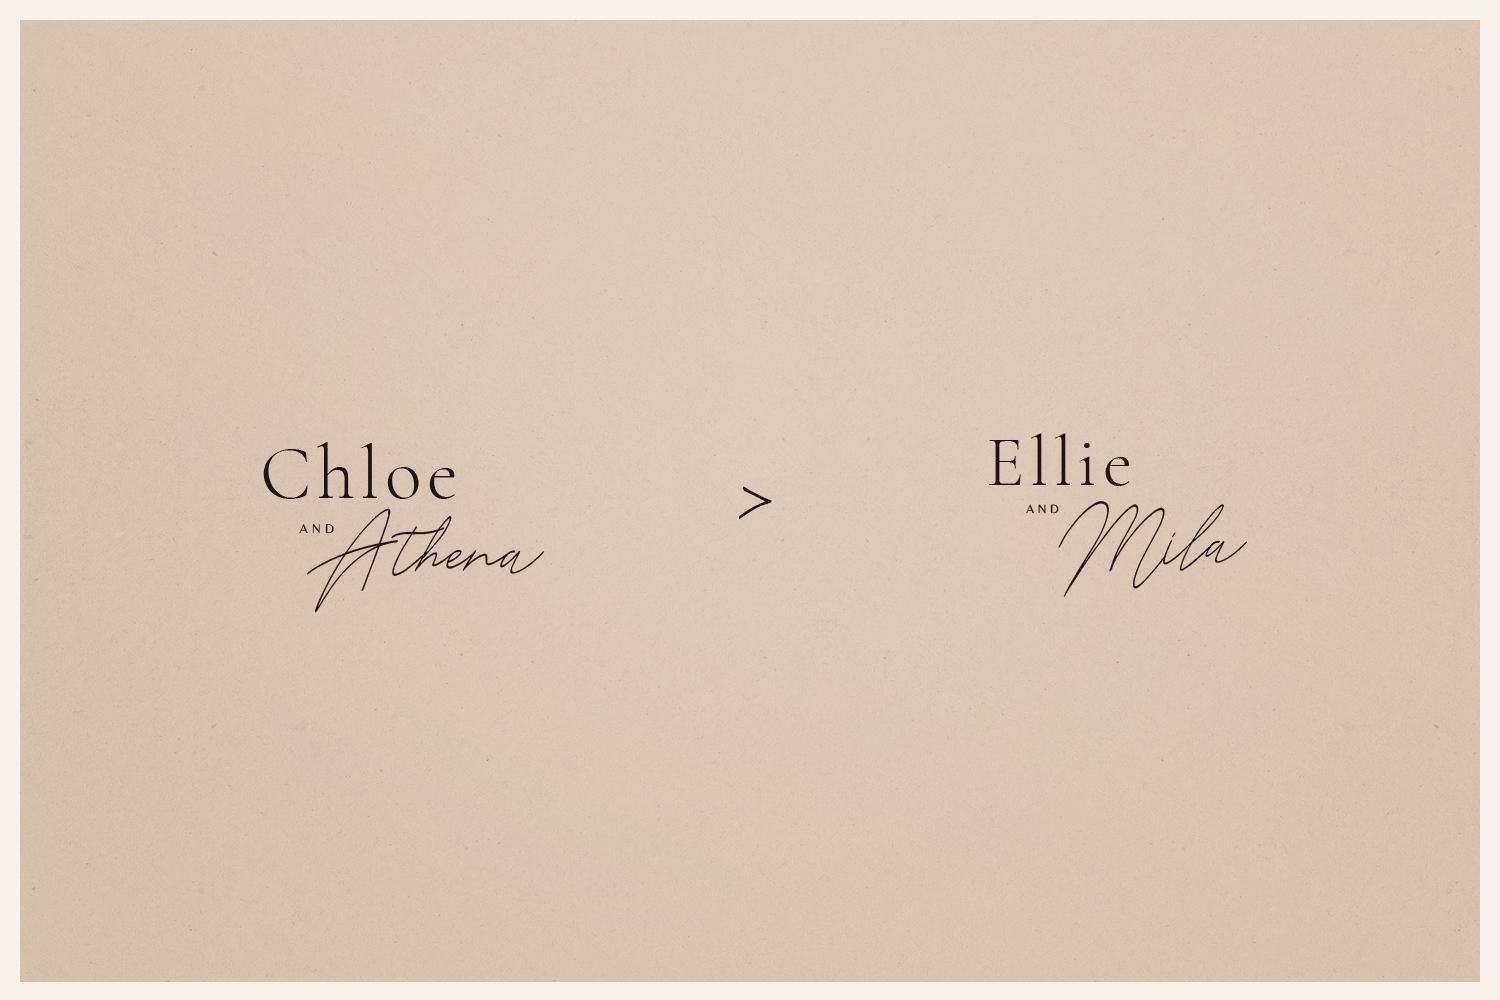 Chloe - Brand Kits — Emily Banks Creative - Branding & Graphic Design